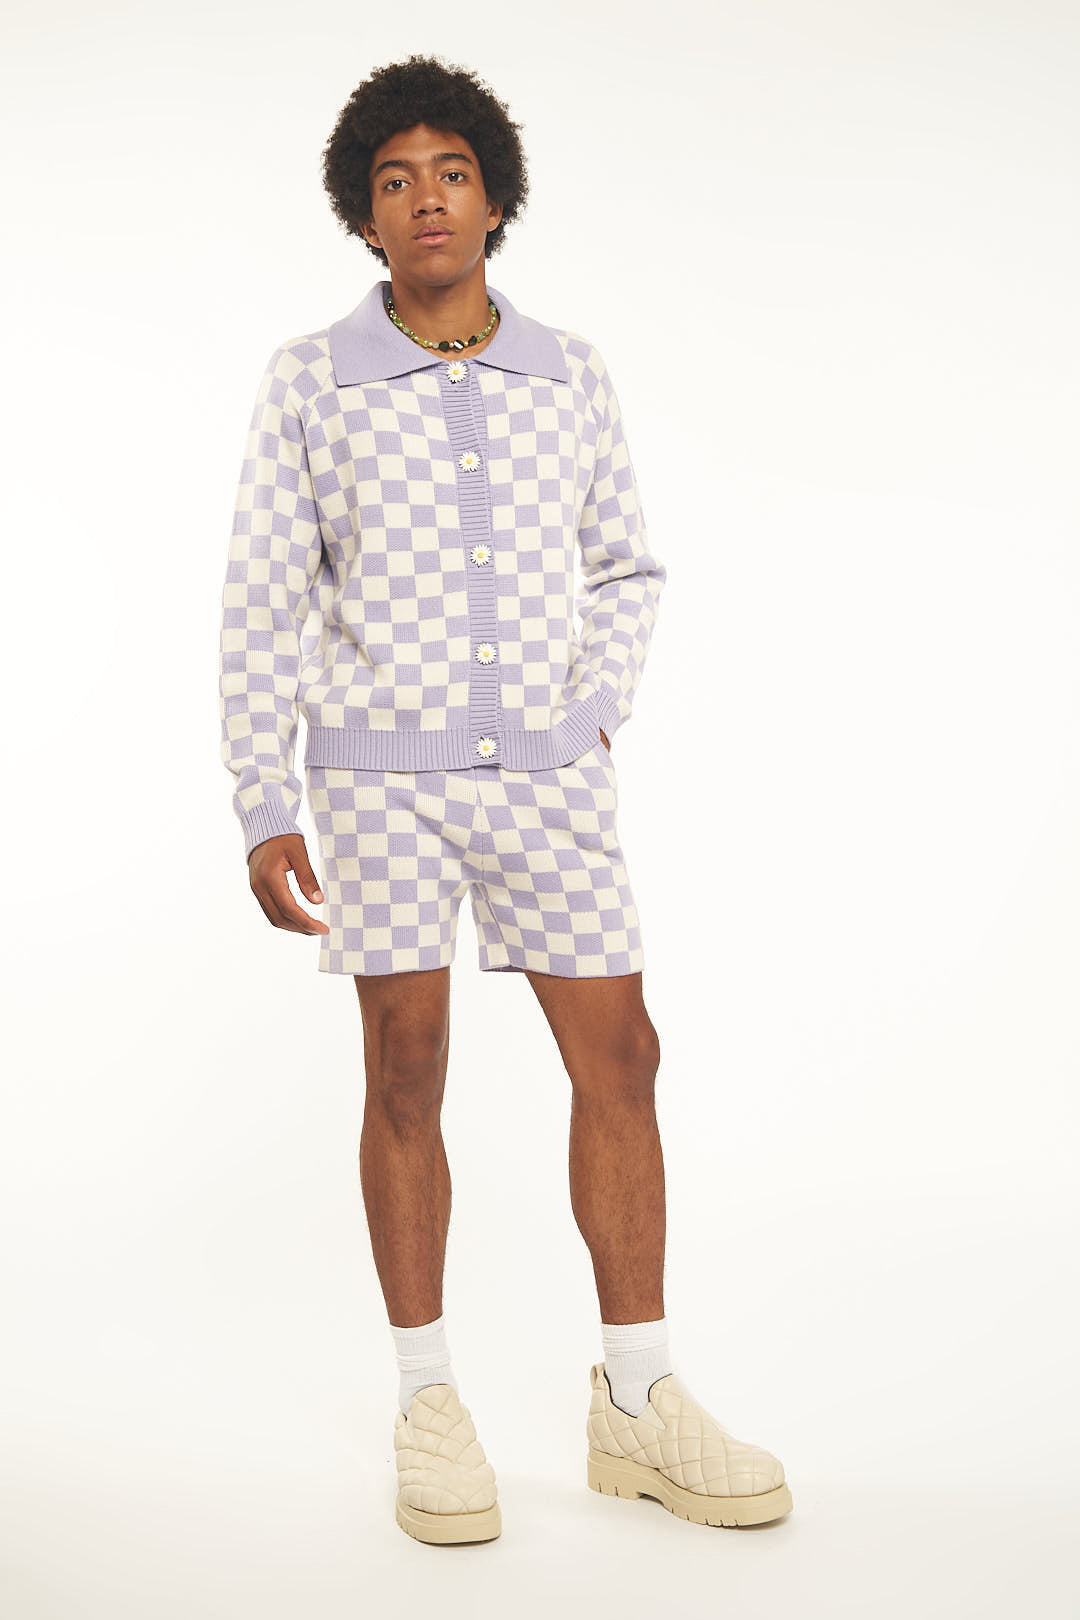 Lavender Checkered Knit Shorts